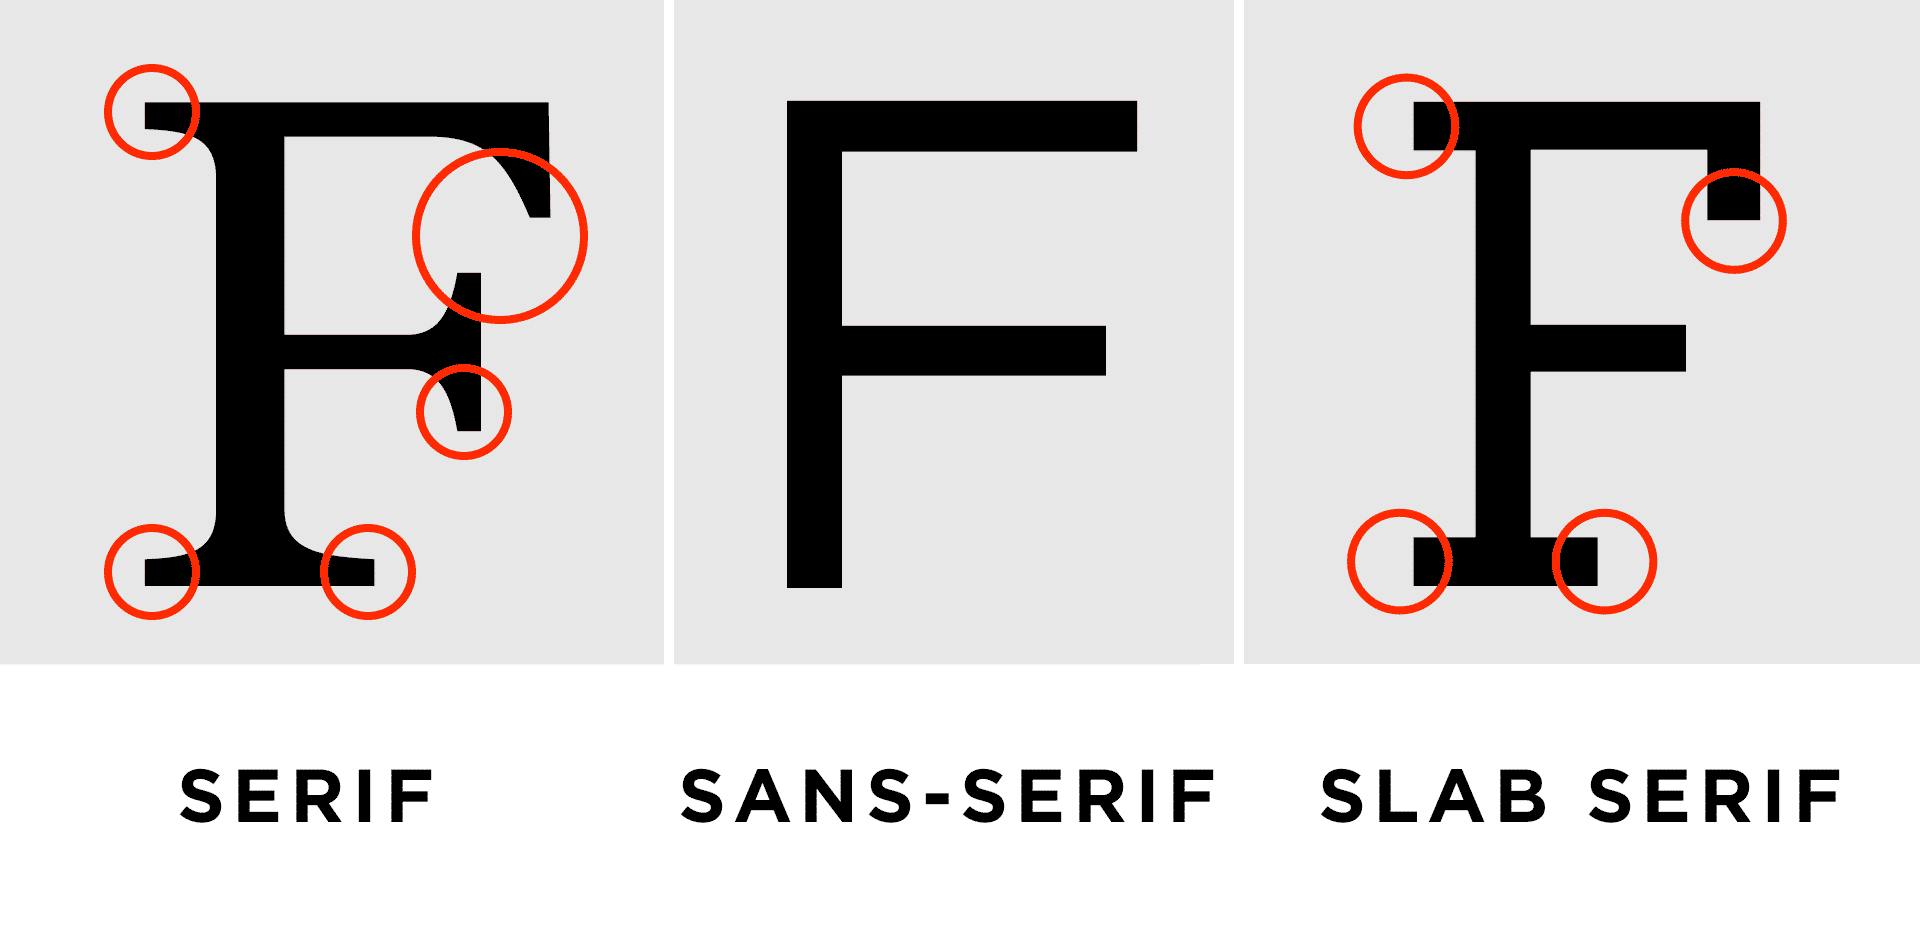 Serif vs Sans-Serif vs Slab Serif Type